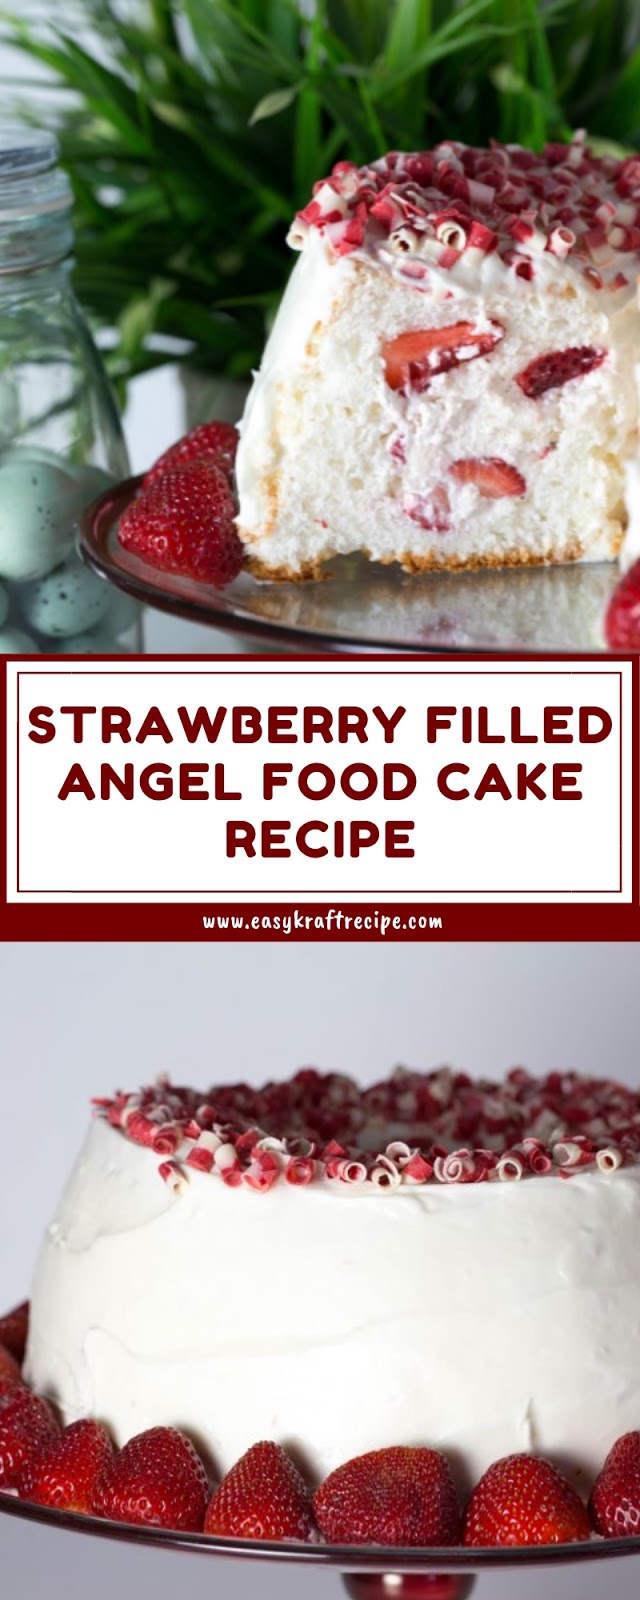 STRAWBERRY FILLED ANGEL FOOD CAKE RECIPE